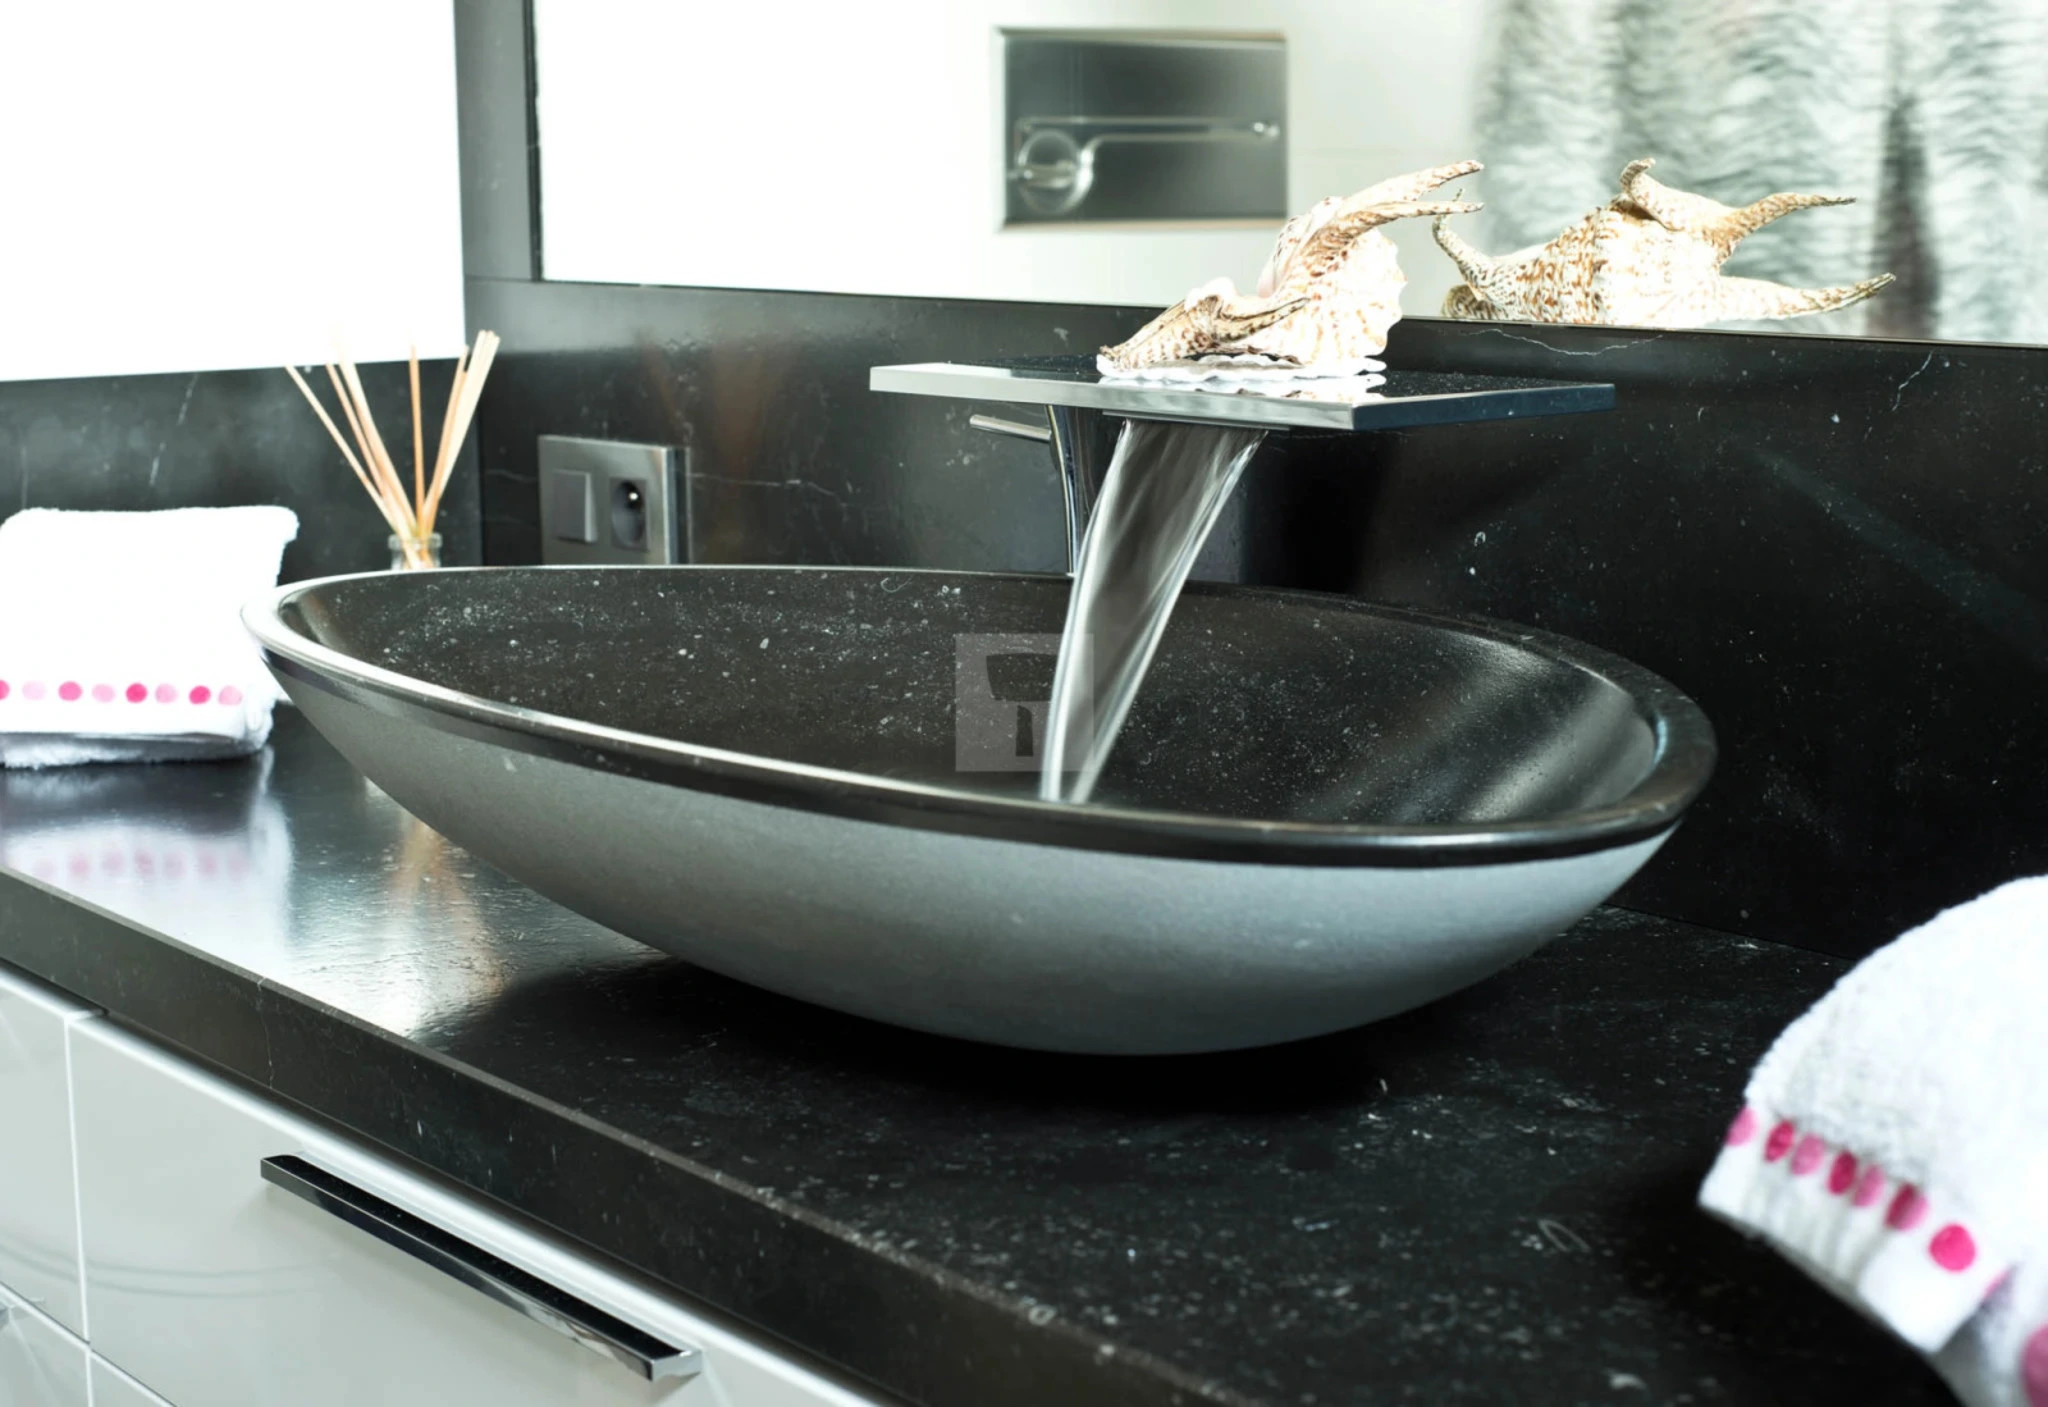 An elegant bluestone sink and countertop